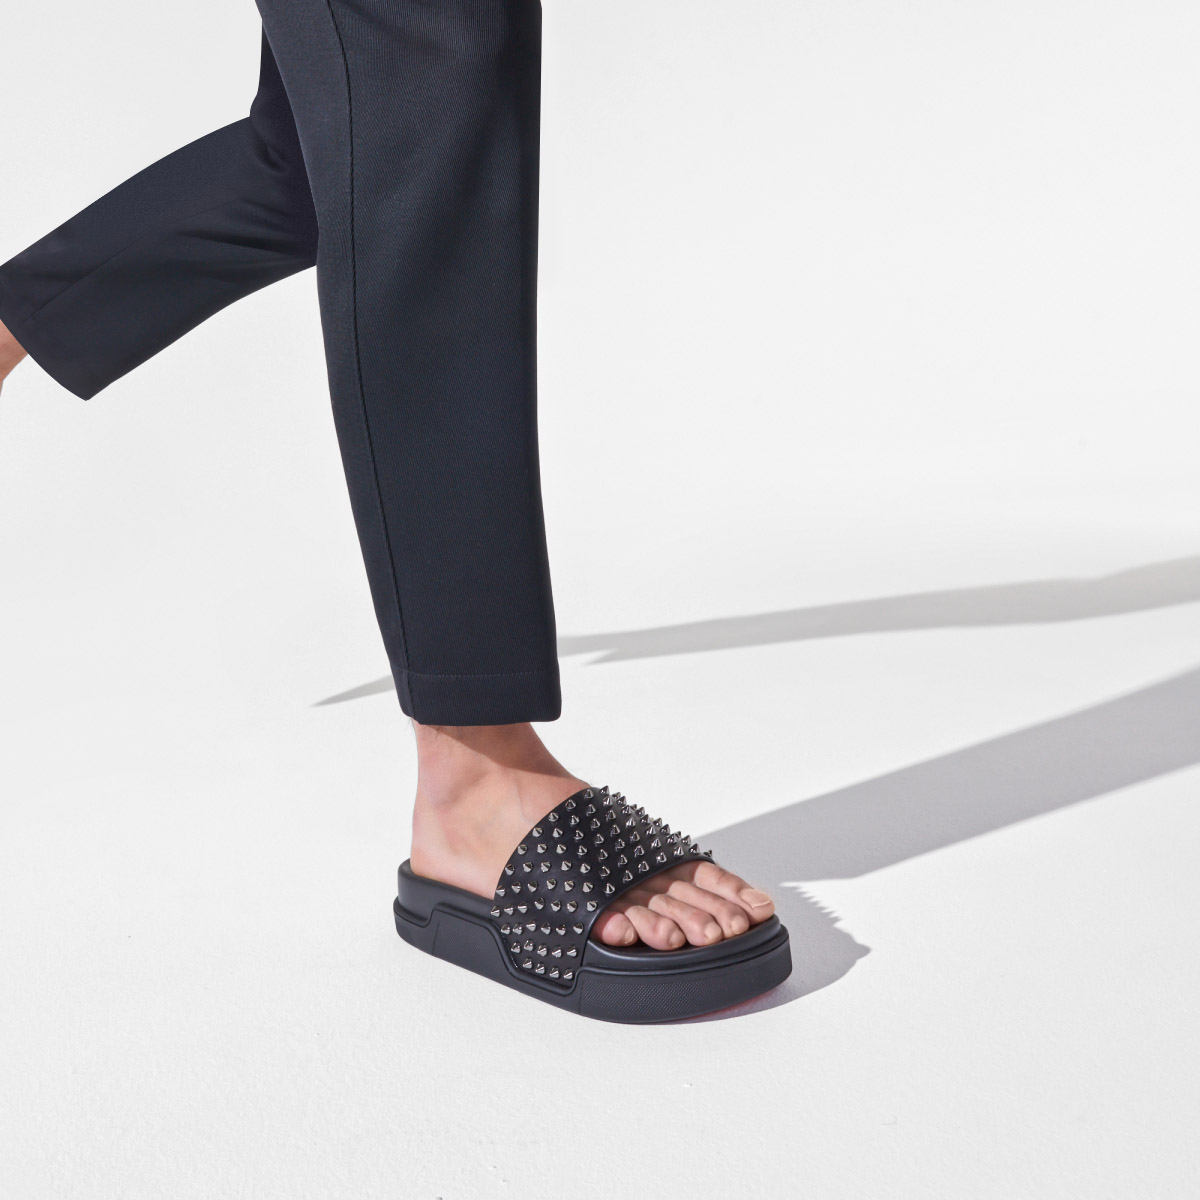 Christian Louboutin slippers on feet 